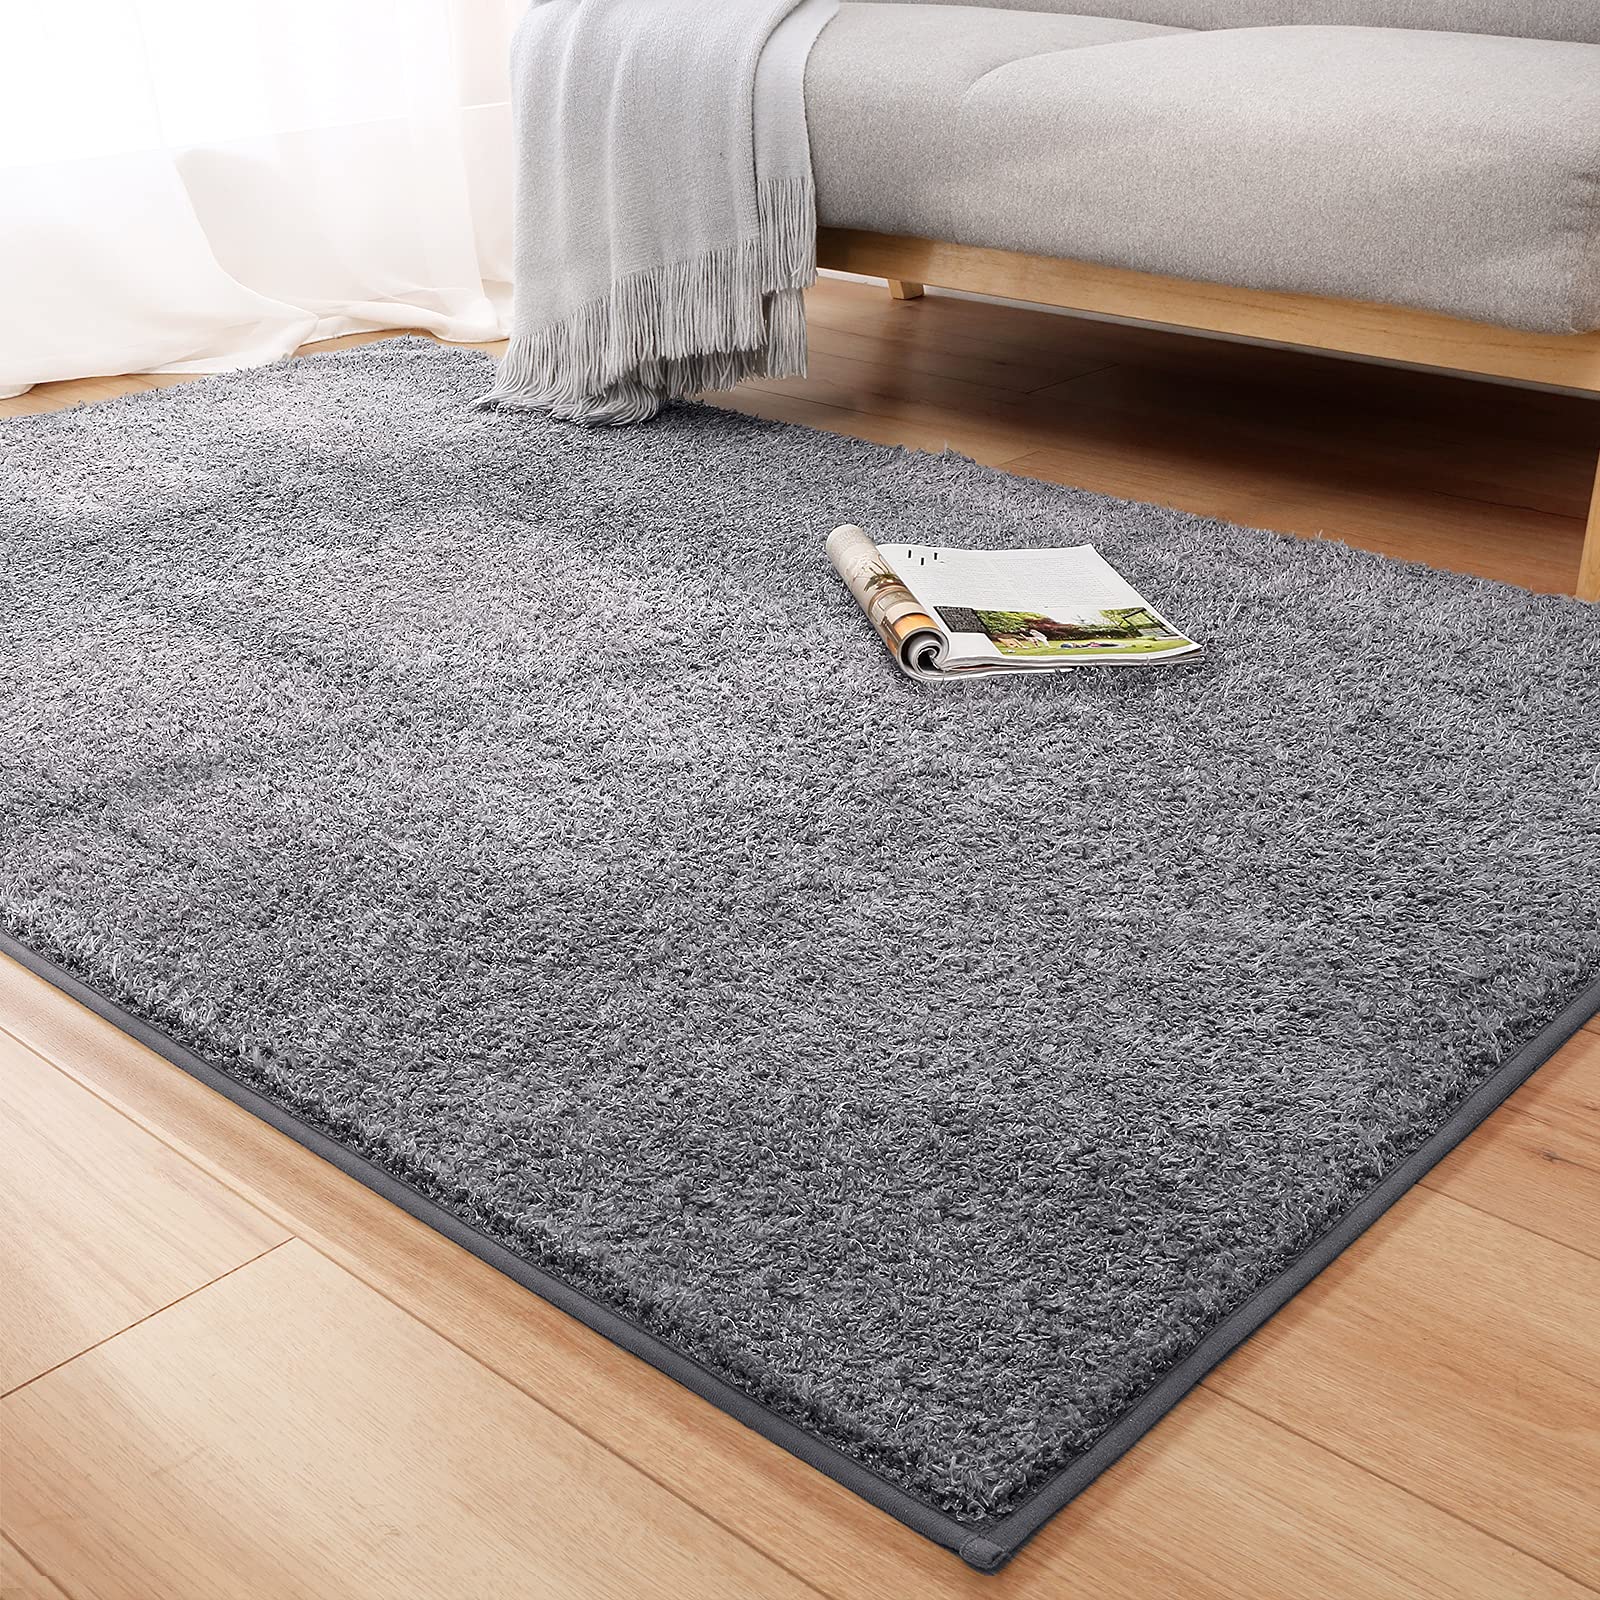 DEXI Area Rug Carpet Rugs Floor Mat Shaggy Carpets 5x7 for Living Room Bedroom Soft,Gray